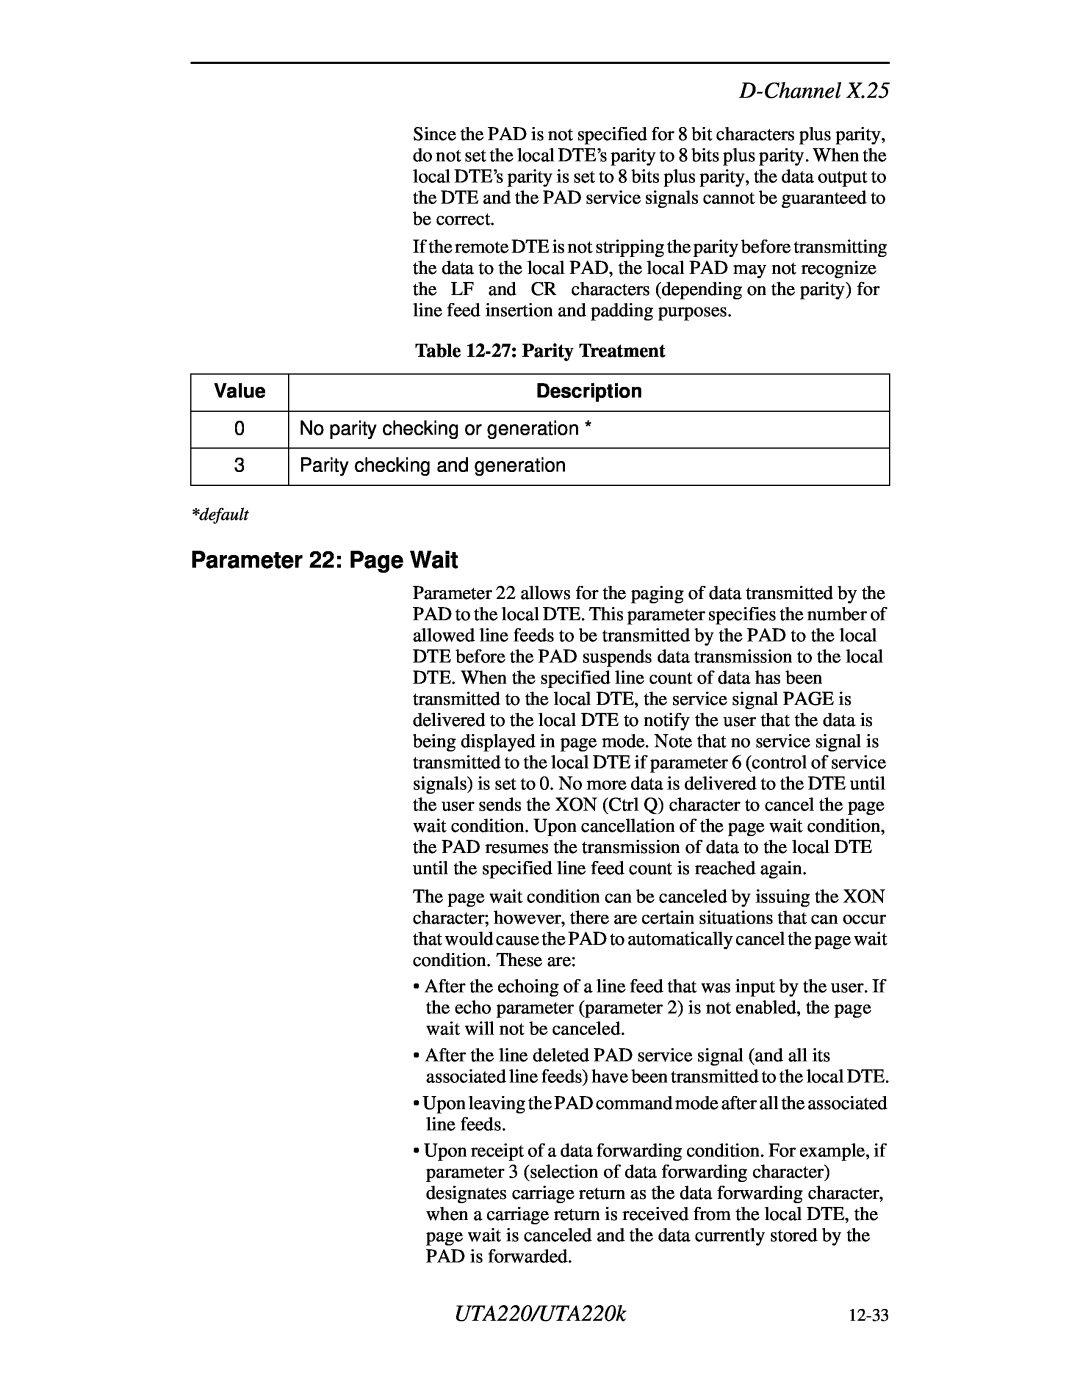 Northern UTA220/UTA220k manual Parameter 22 Page Wait, D-Channel, 27 Parity Treatment, Value 